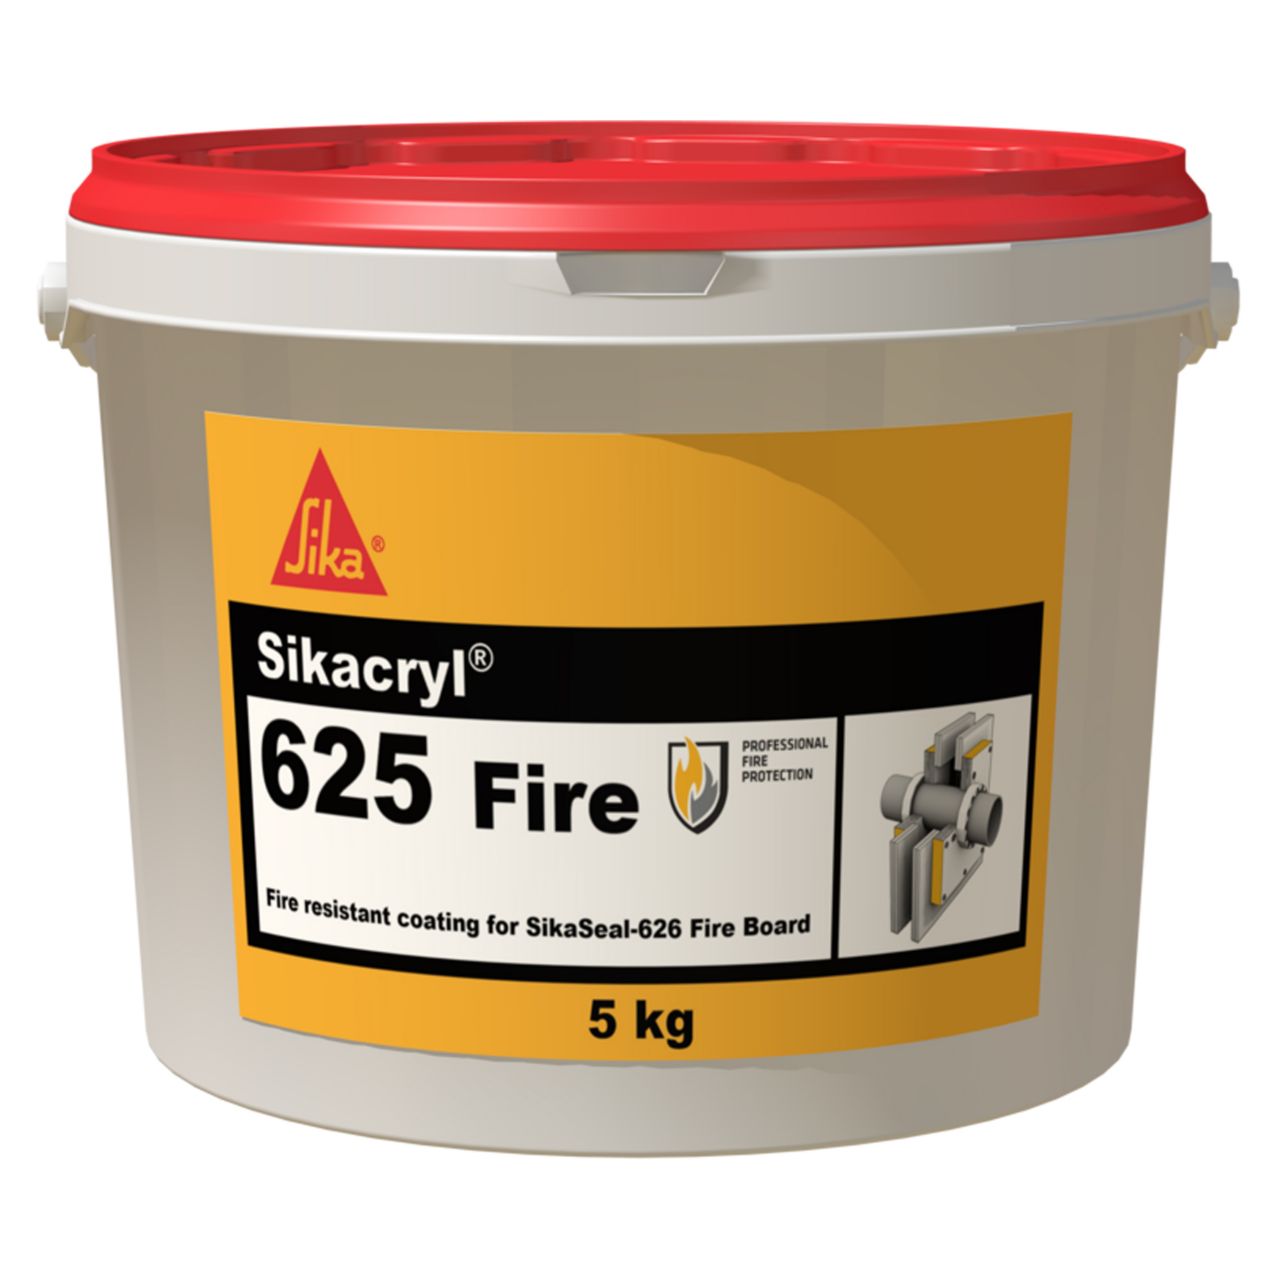 Sikacryl-625 Fire